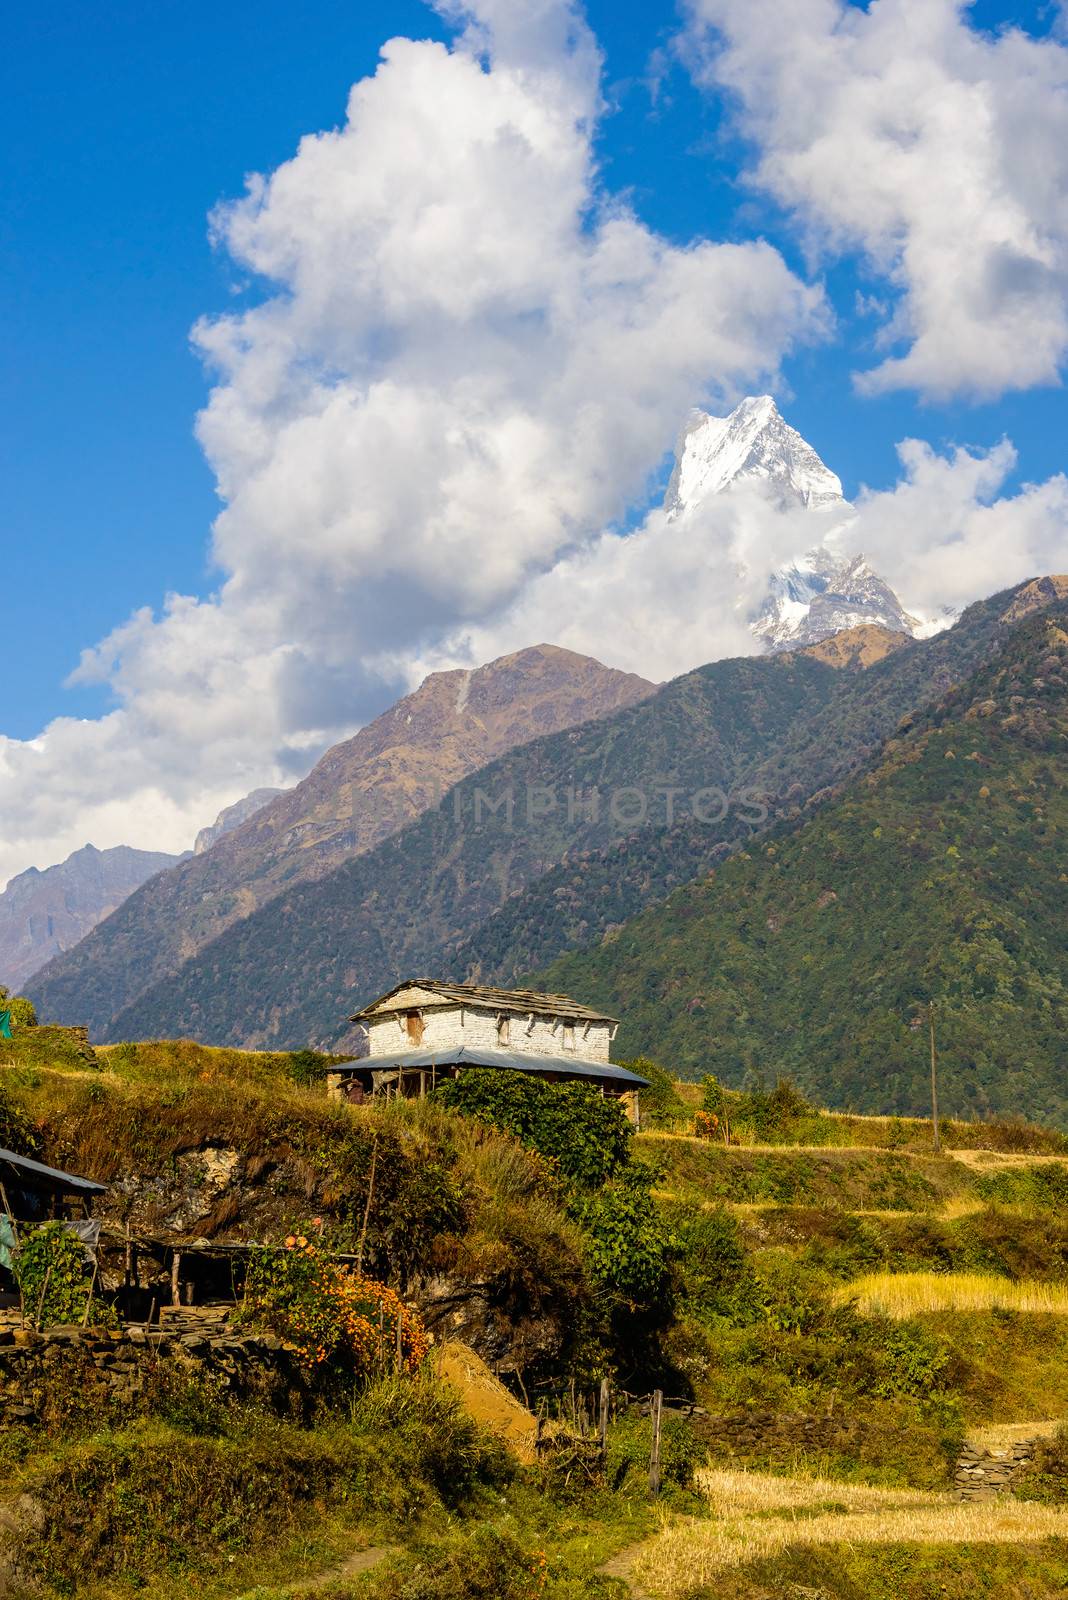 Nepalese landscape in the Annapurna region